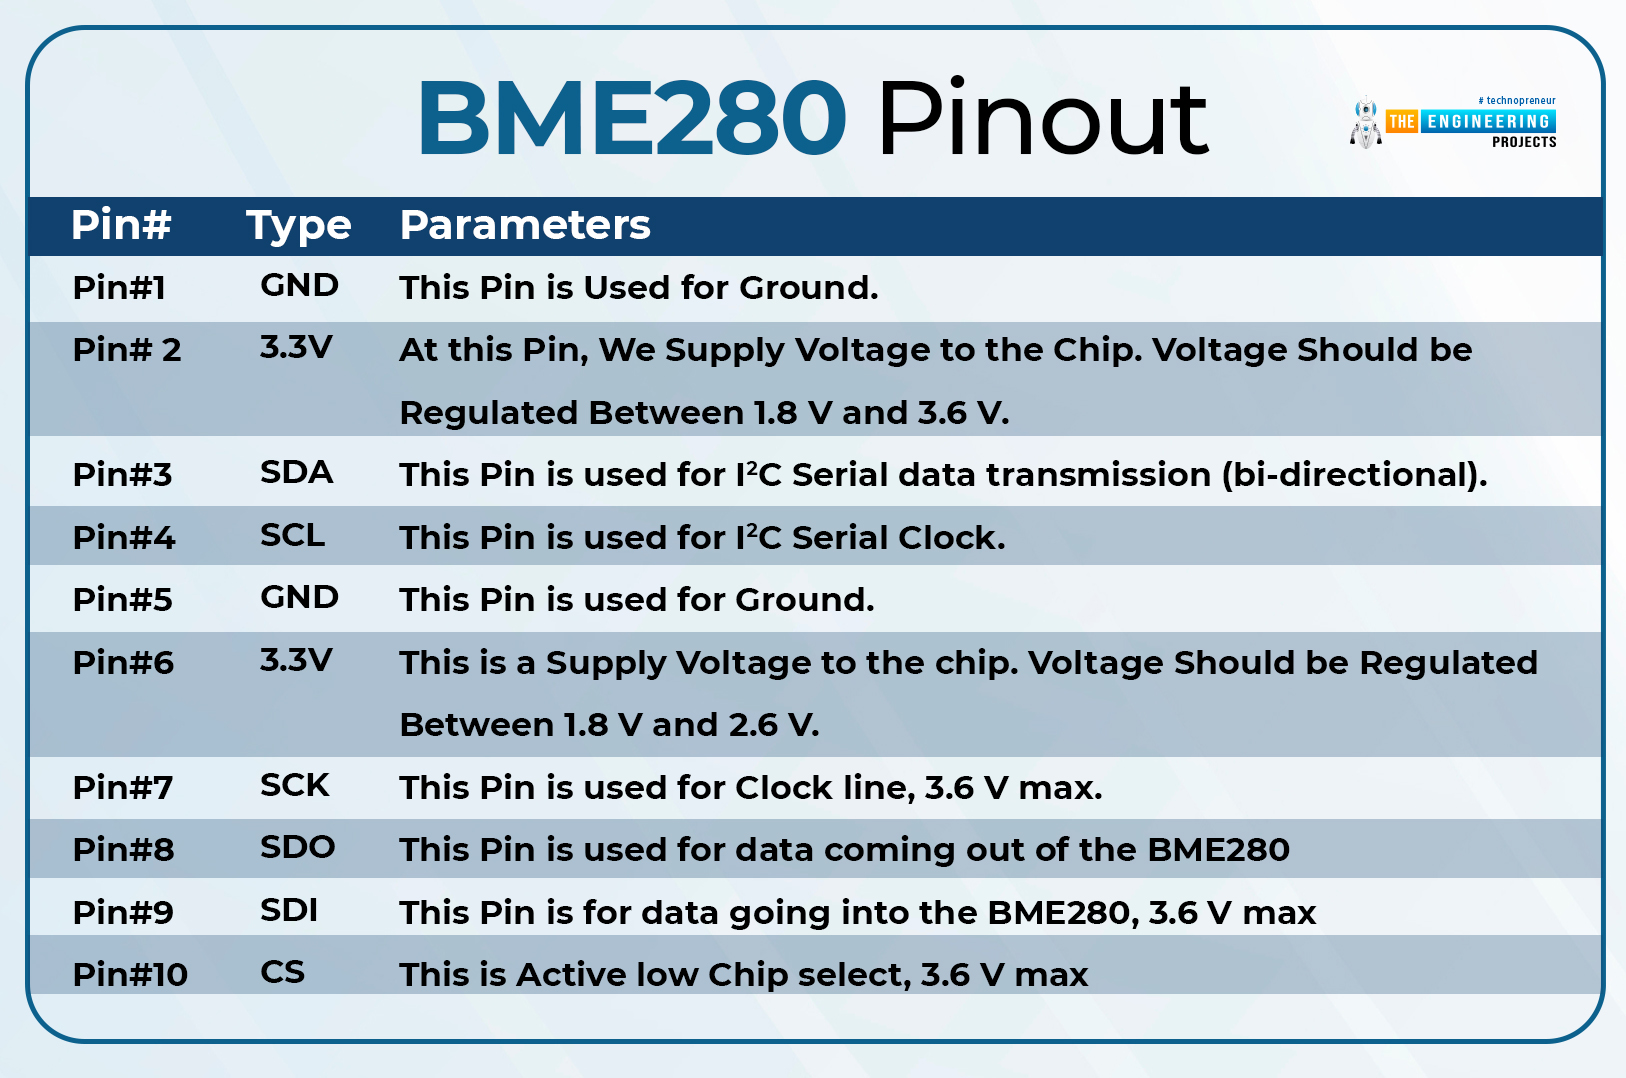 Introduction to BME280, bme280 intro, bme280 basics, bme280 pinout, bme280 applications, bme280 working, bme 280 datasheet